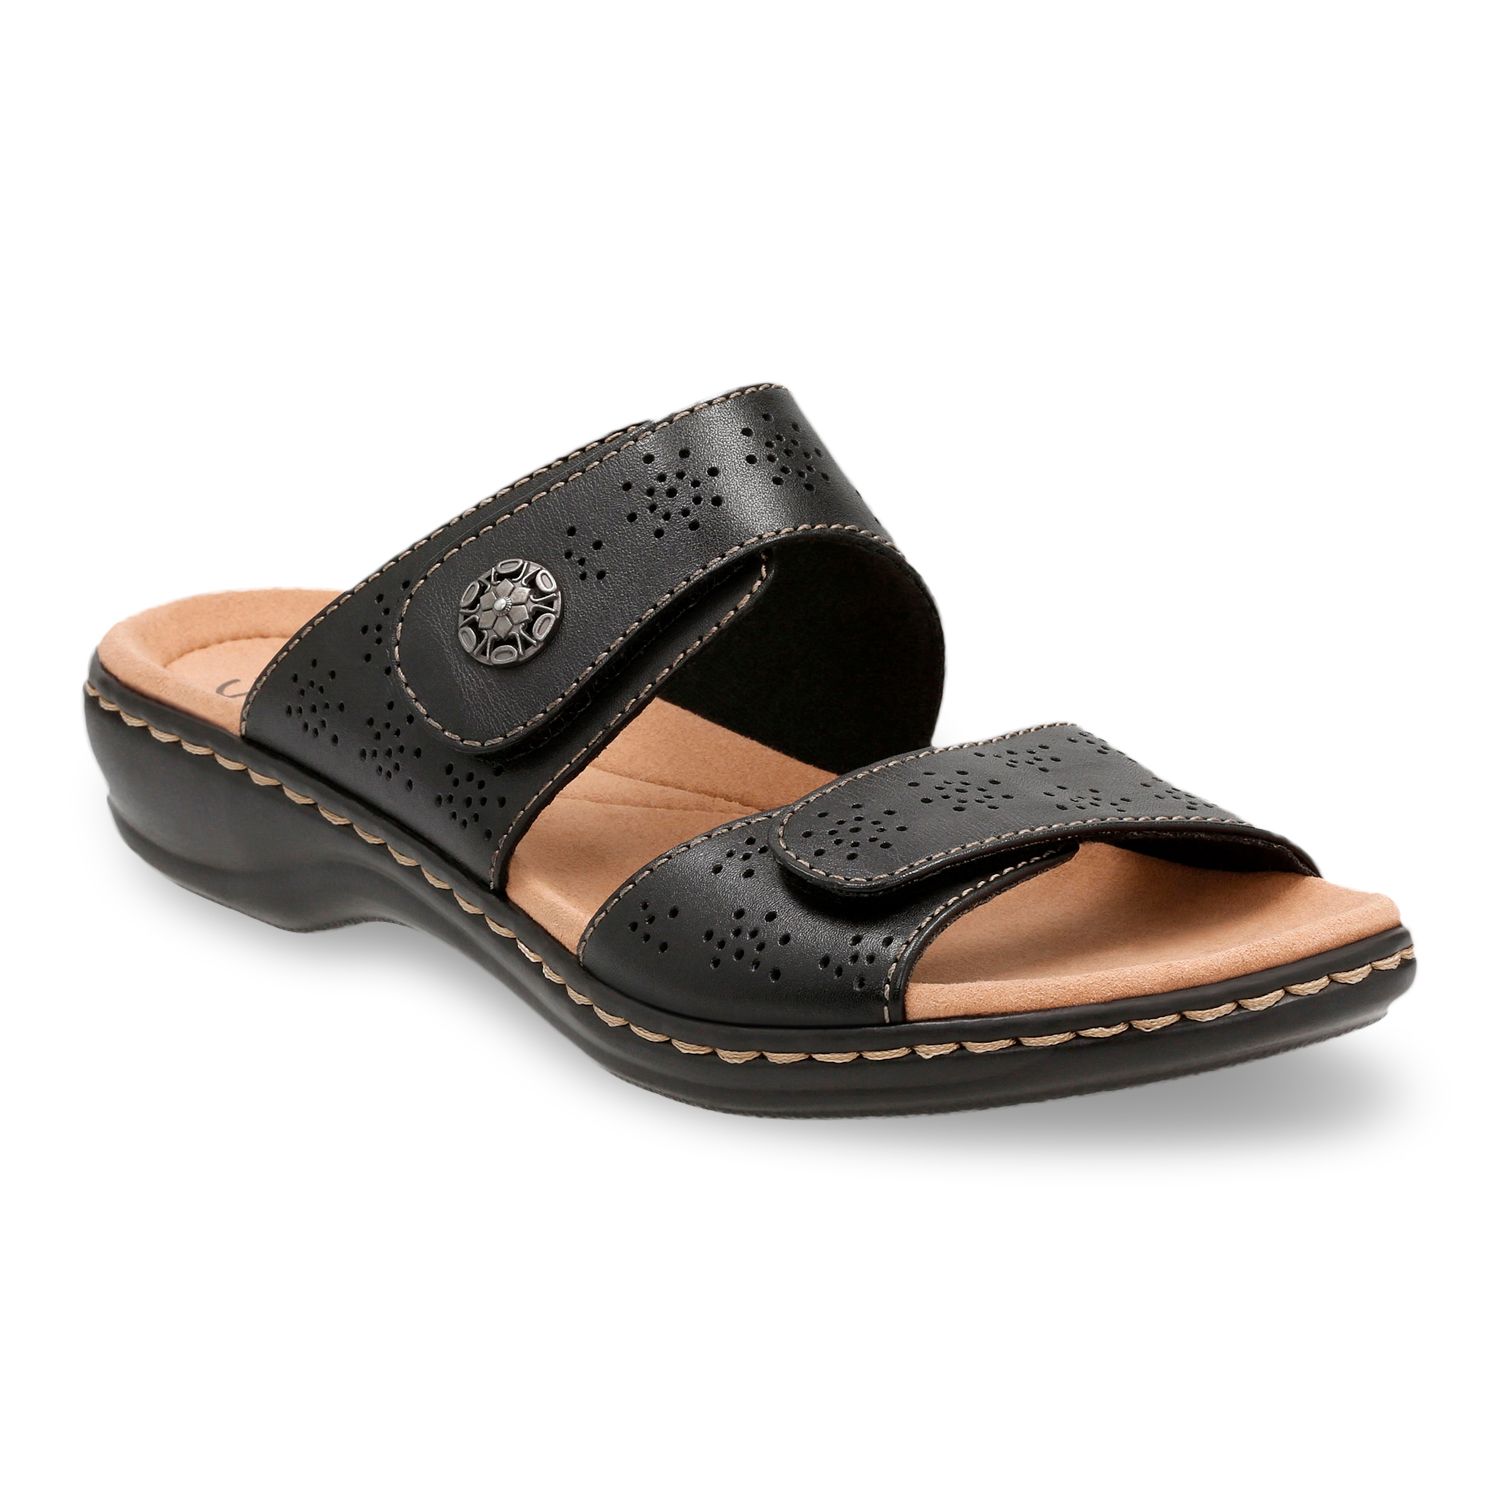 clarks ultimate comfort sandals